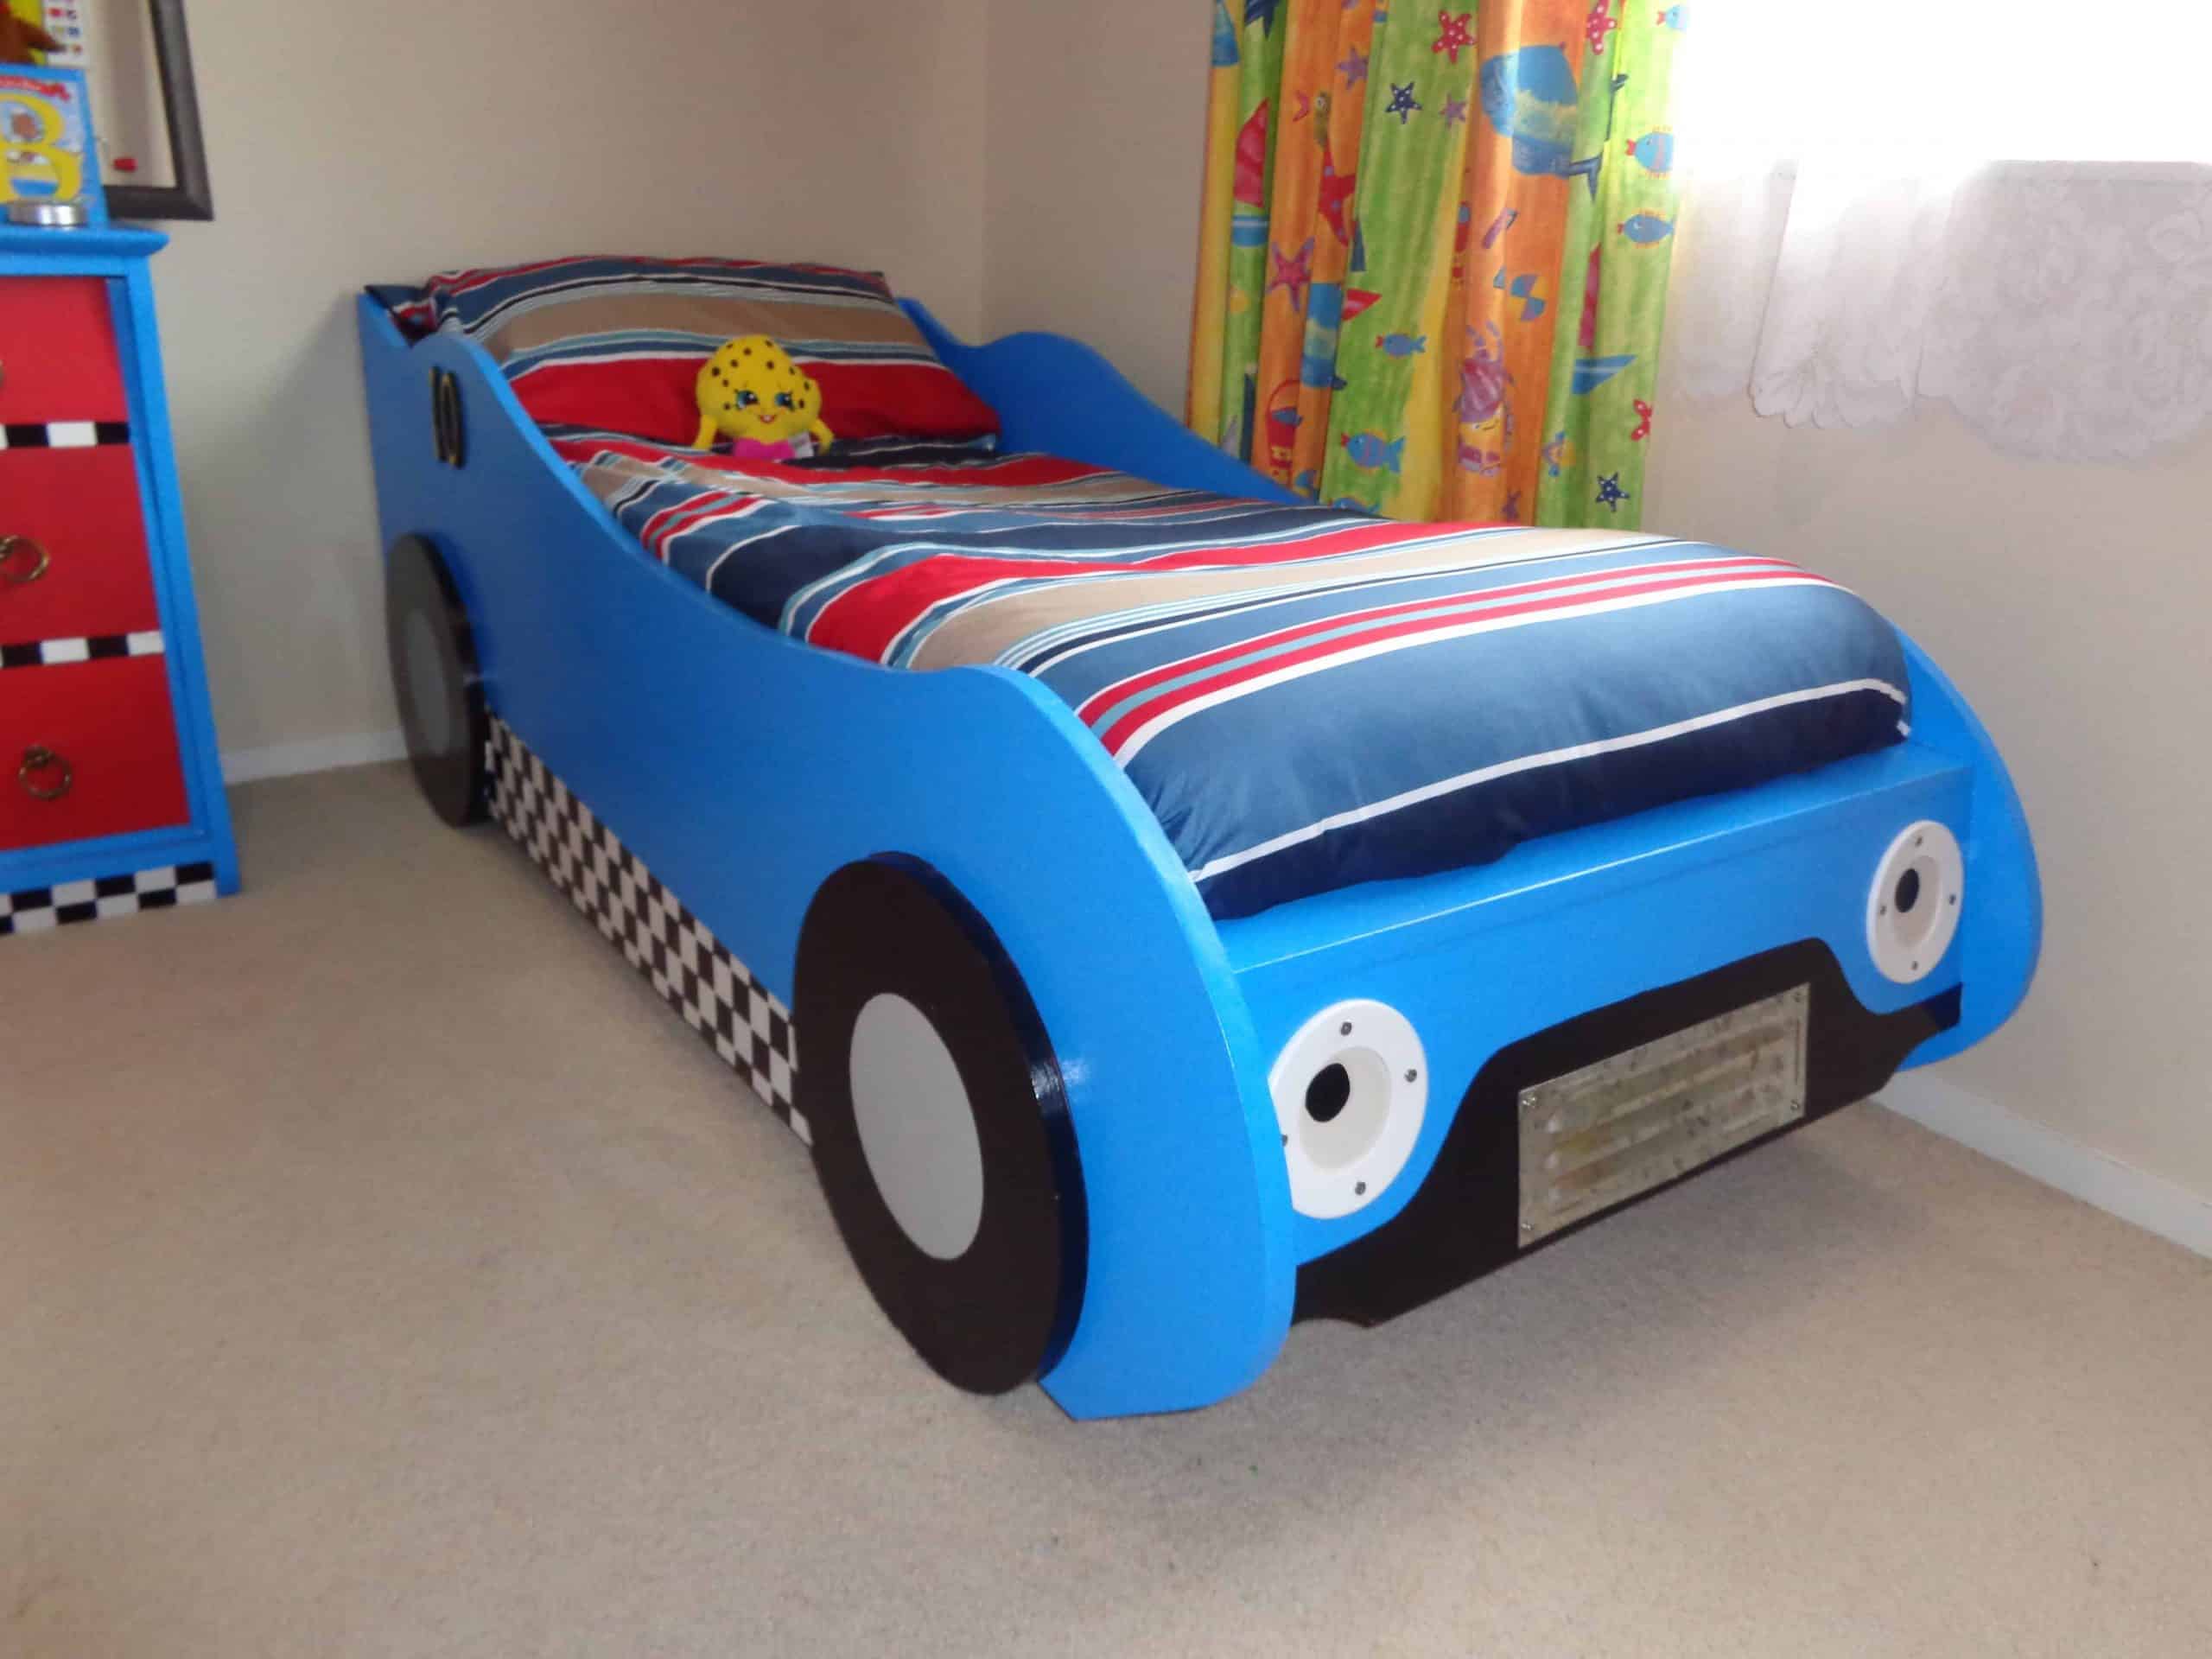 car bed mattress and shelving